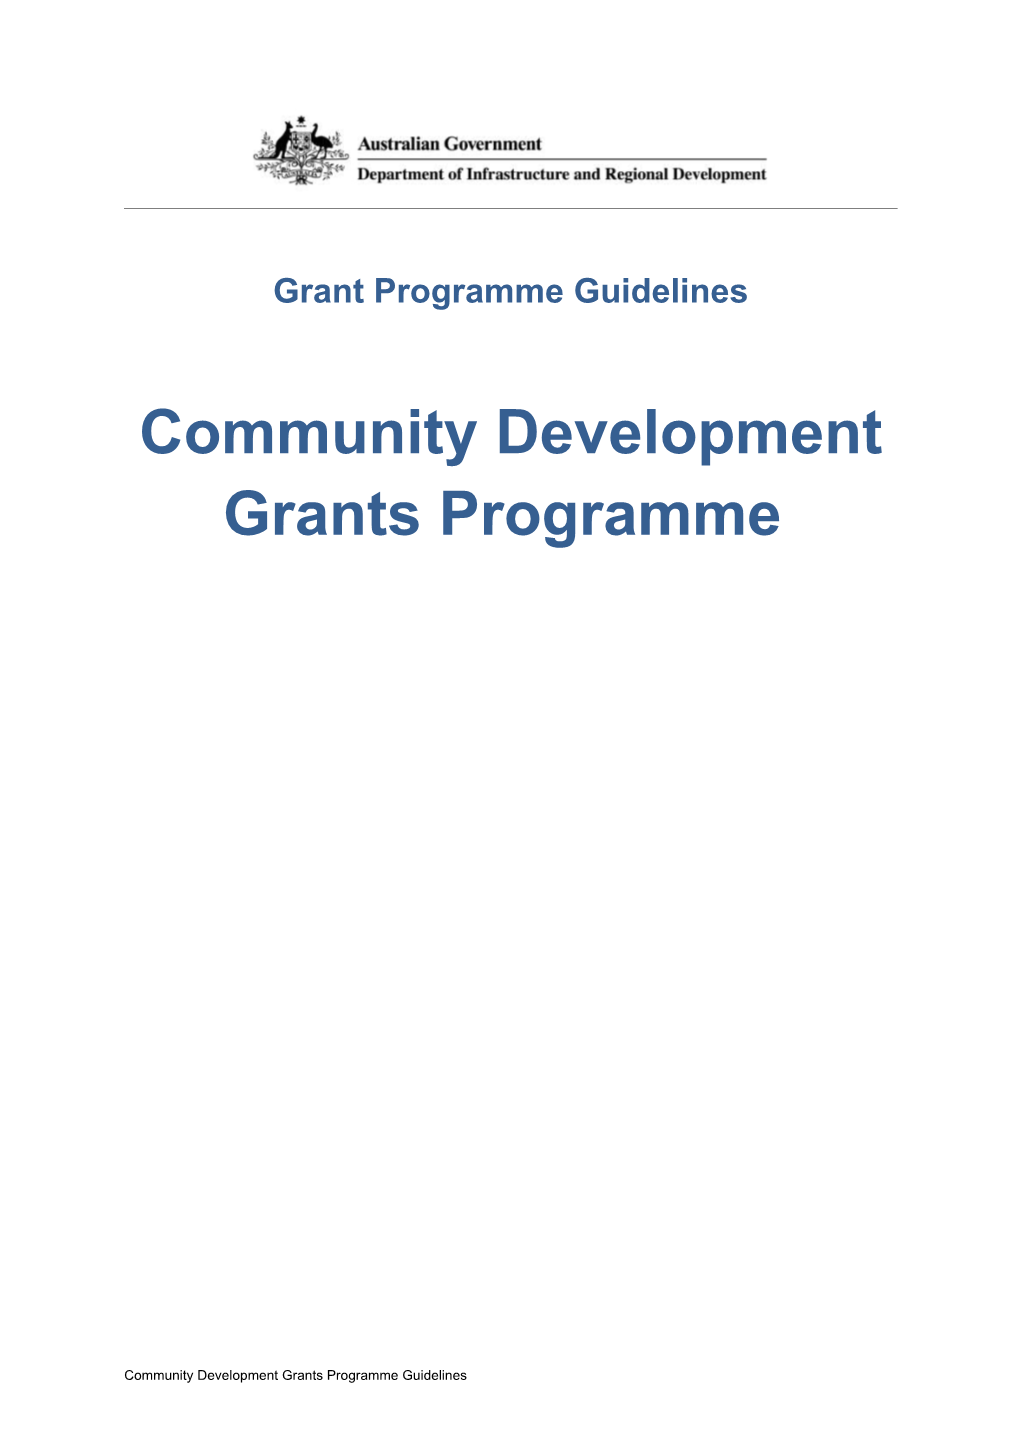 Community Development Grants Programme